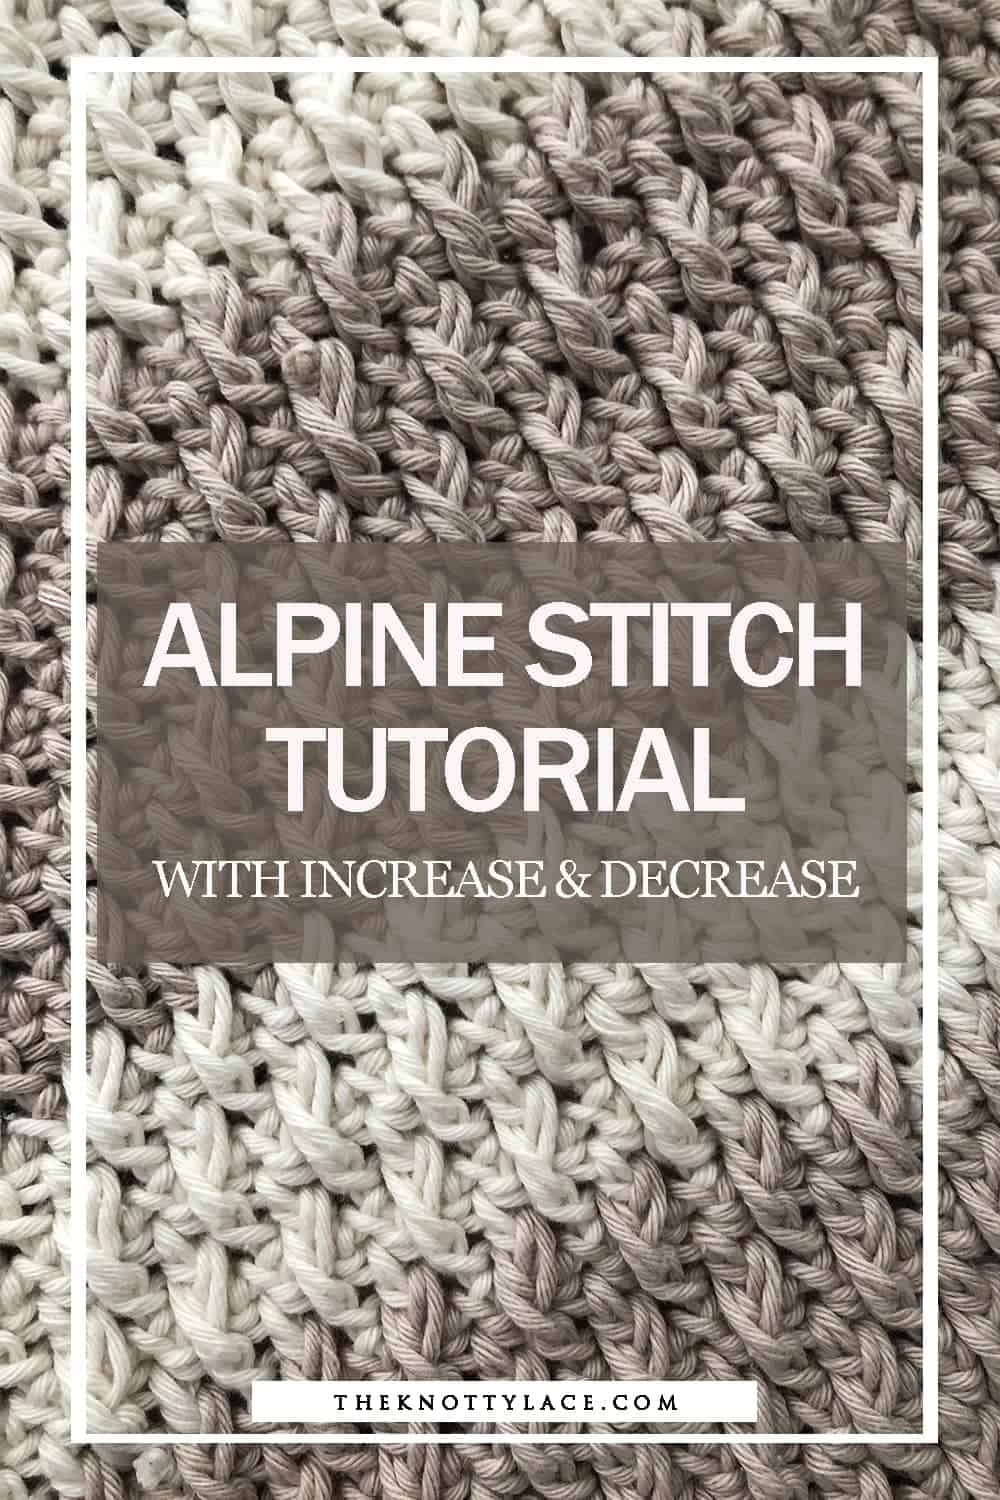 alpine stitch video tutorial with increase & decrease